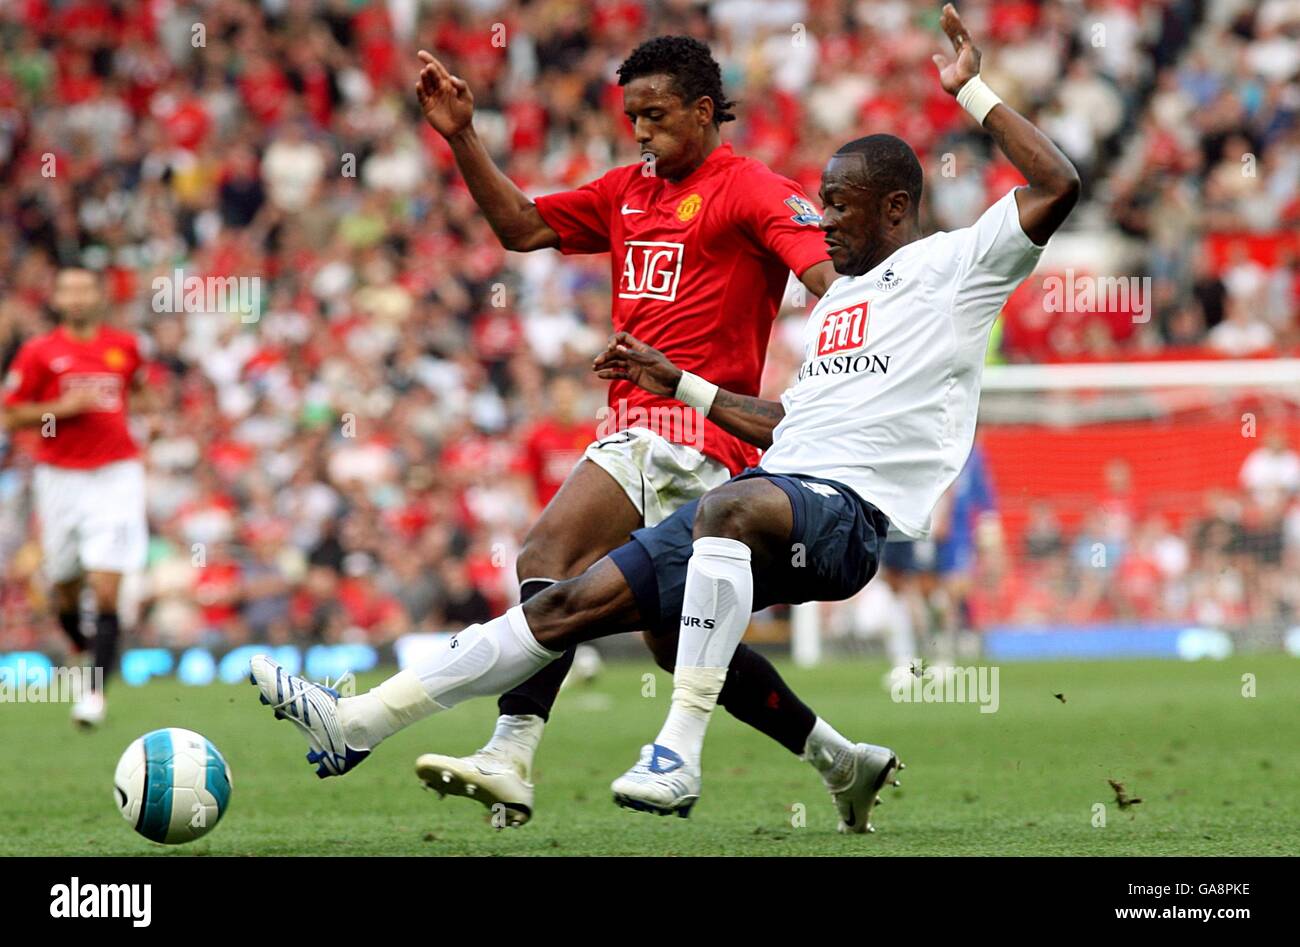 Soccer - Barclays Premier League - Manchester United v Tottenham Hotspur - Old Trafford. Manchester United's Luis Nani (left) and Tottenham Hotspur's Didier Zokora battle for the ball. Stock Photo